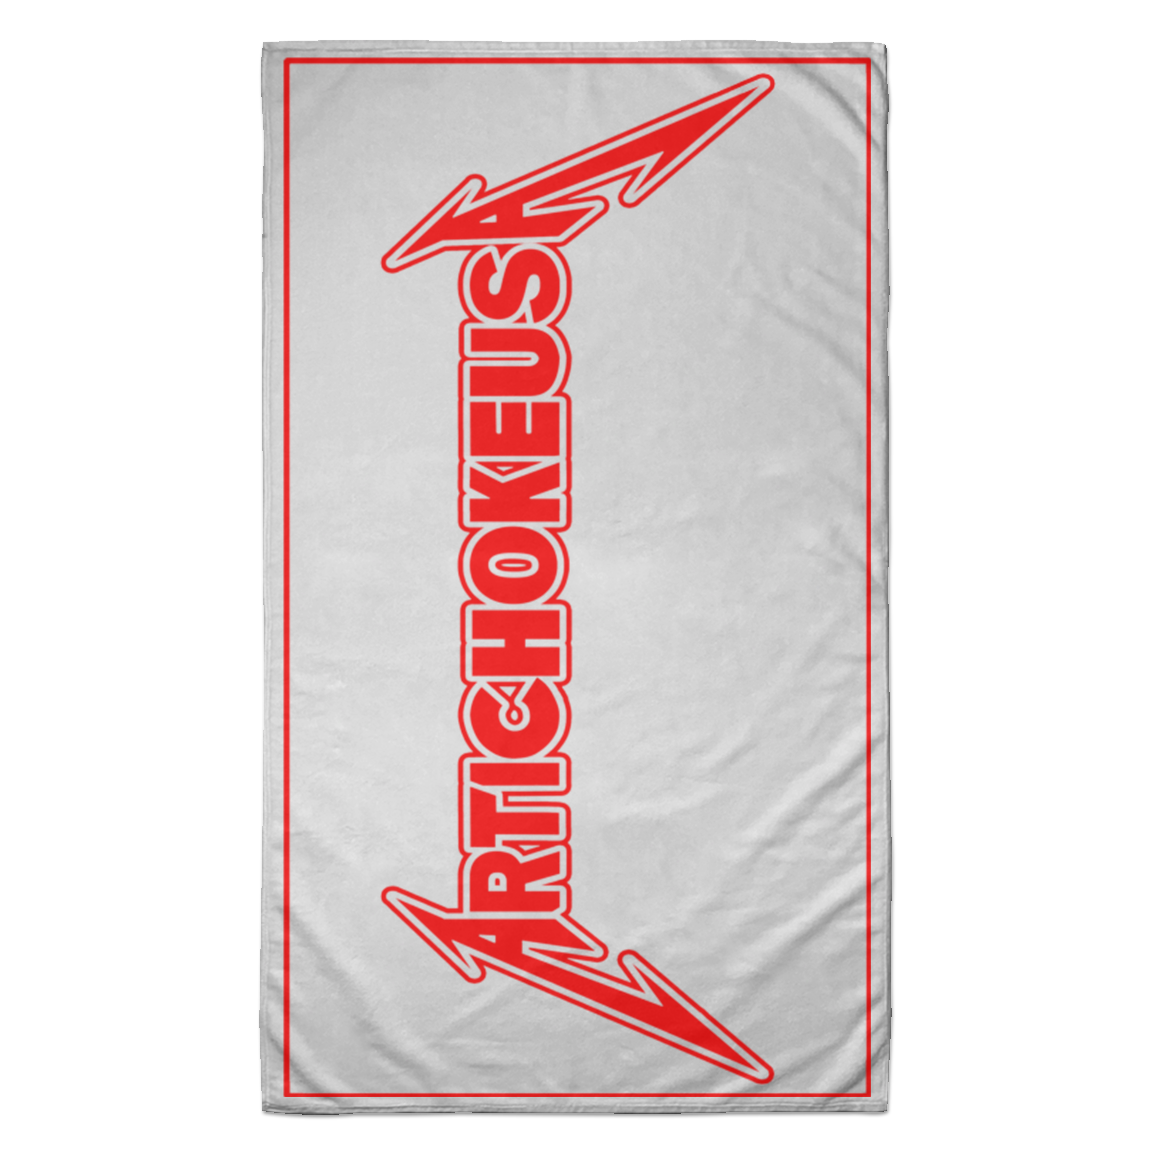 ArtichokeUSA Custom Design. Metallica Style Logo. Let's Make One For Your Project. Towel - 35x60